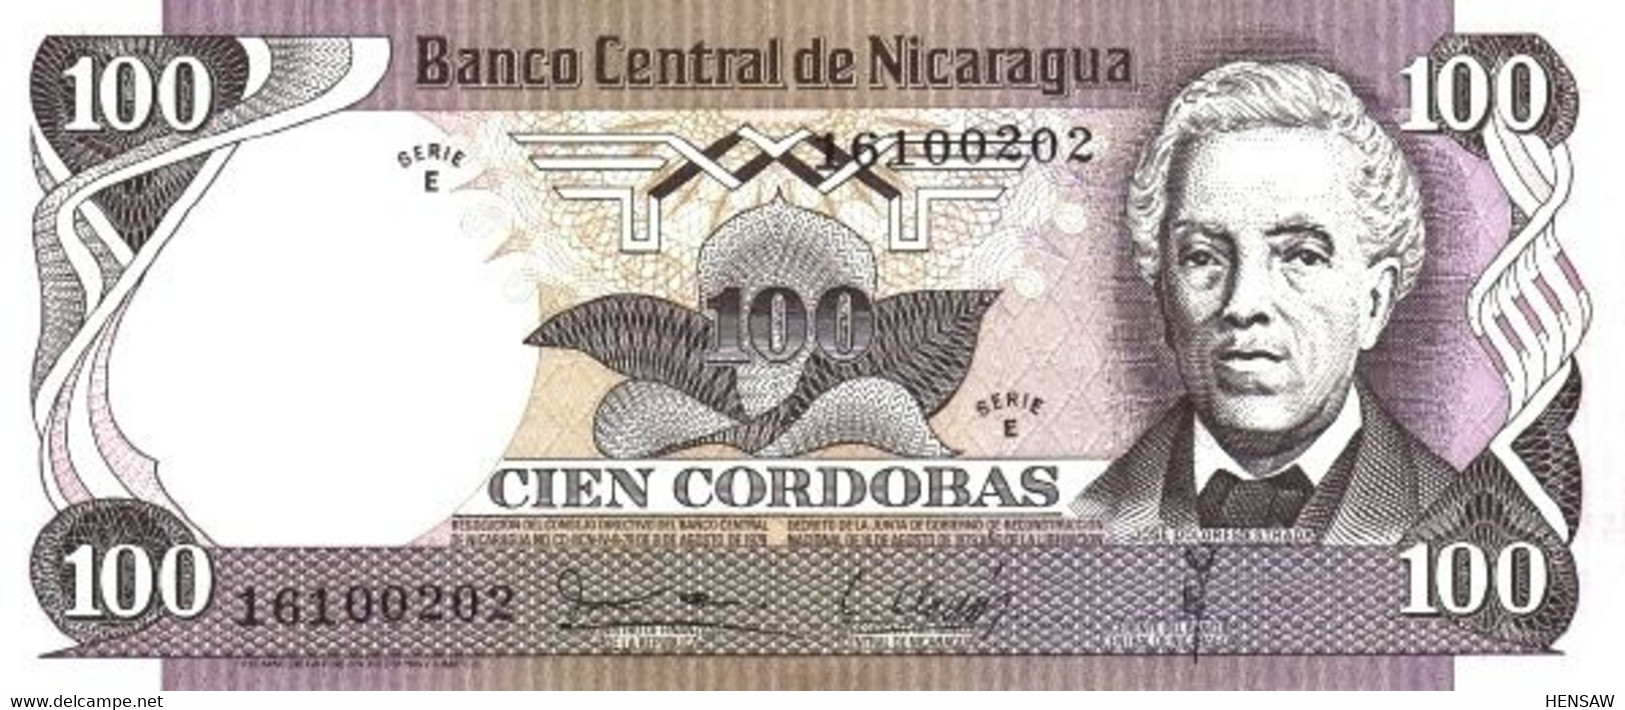 NICARAGUA 100 CORDOBAS 1979 P 137 UNC NUEVO SC - Nicaragua